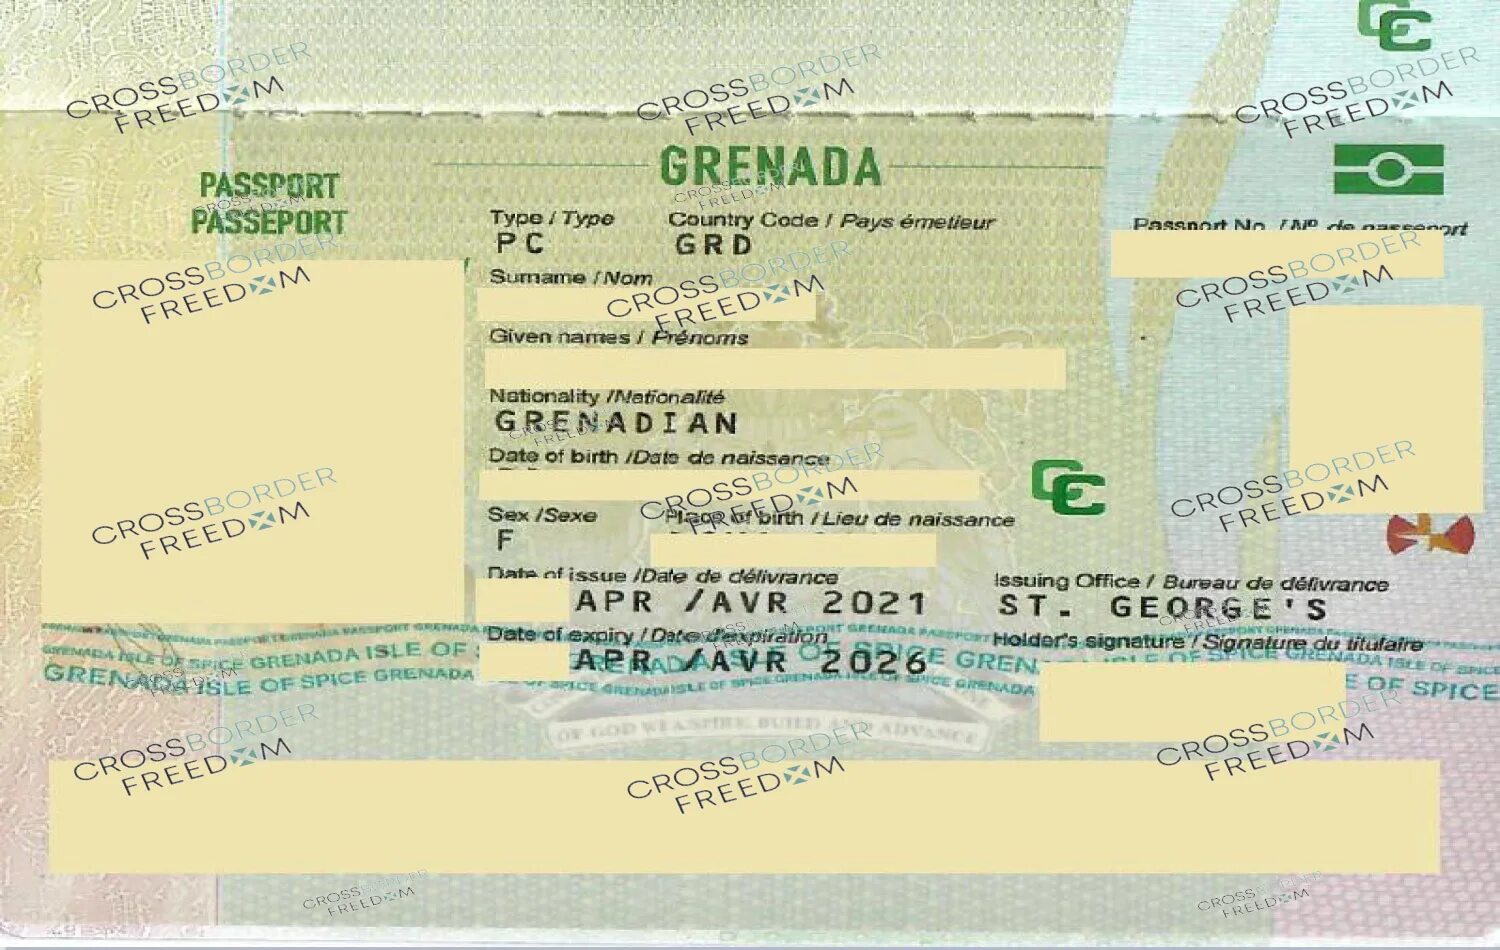 Passport issued. Passport Issue place испанская виза.